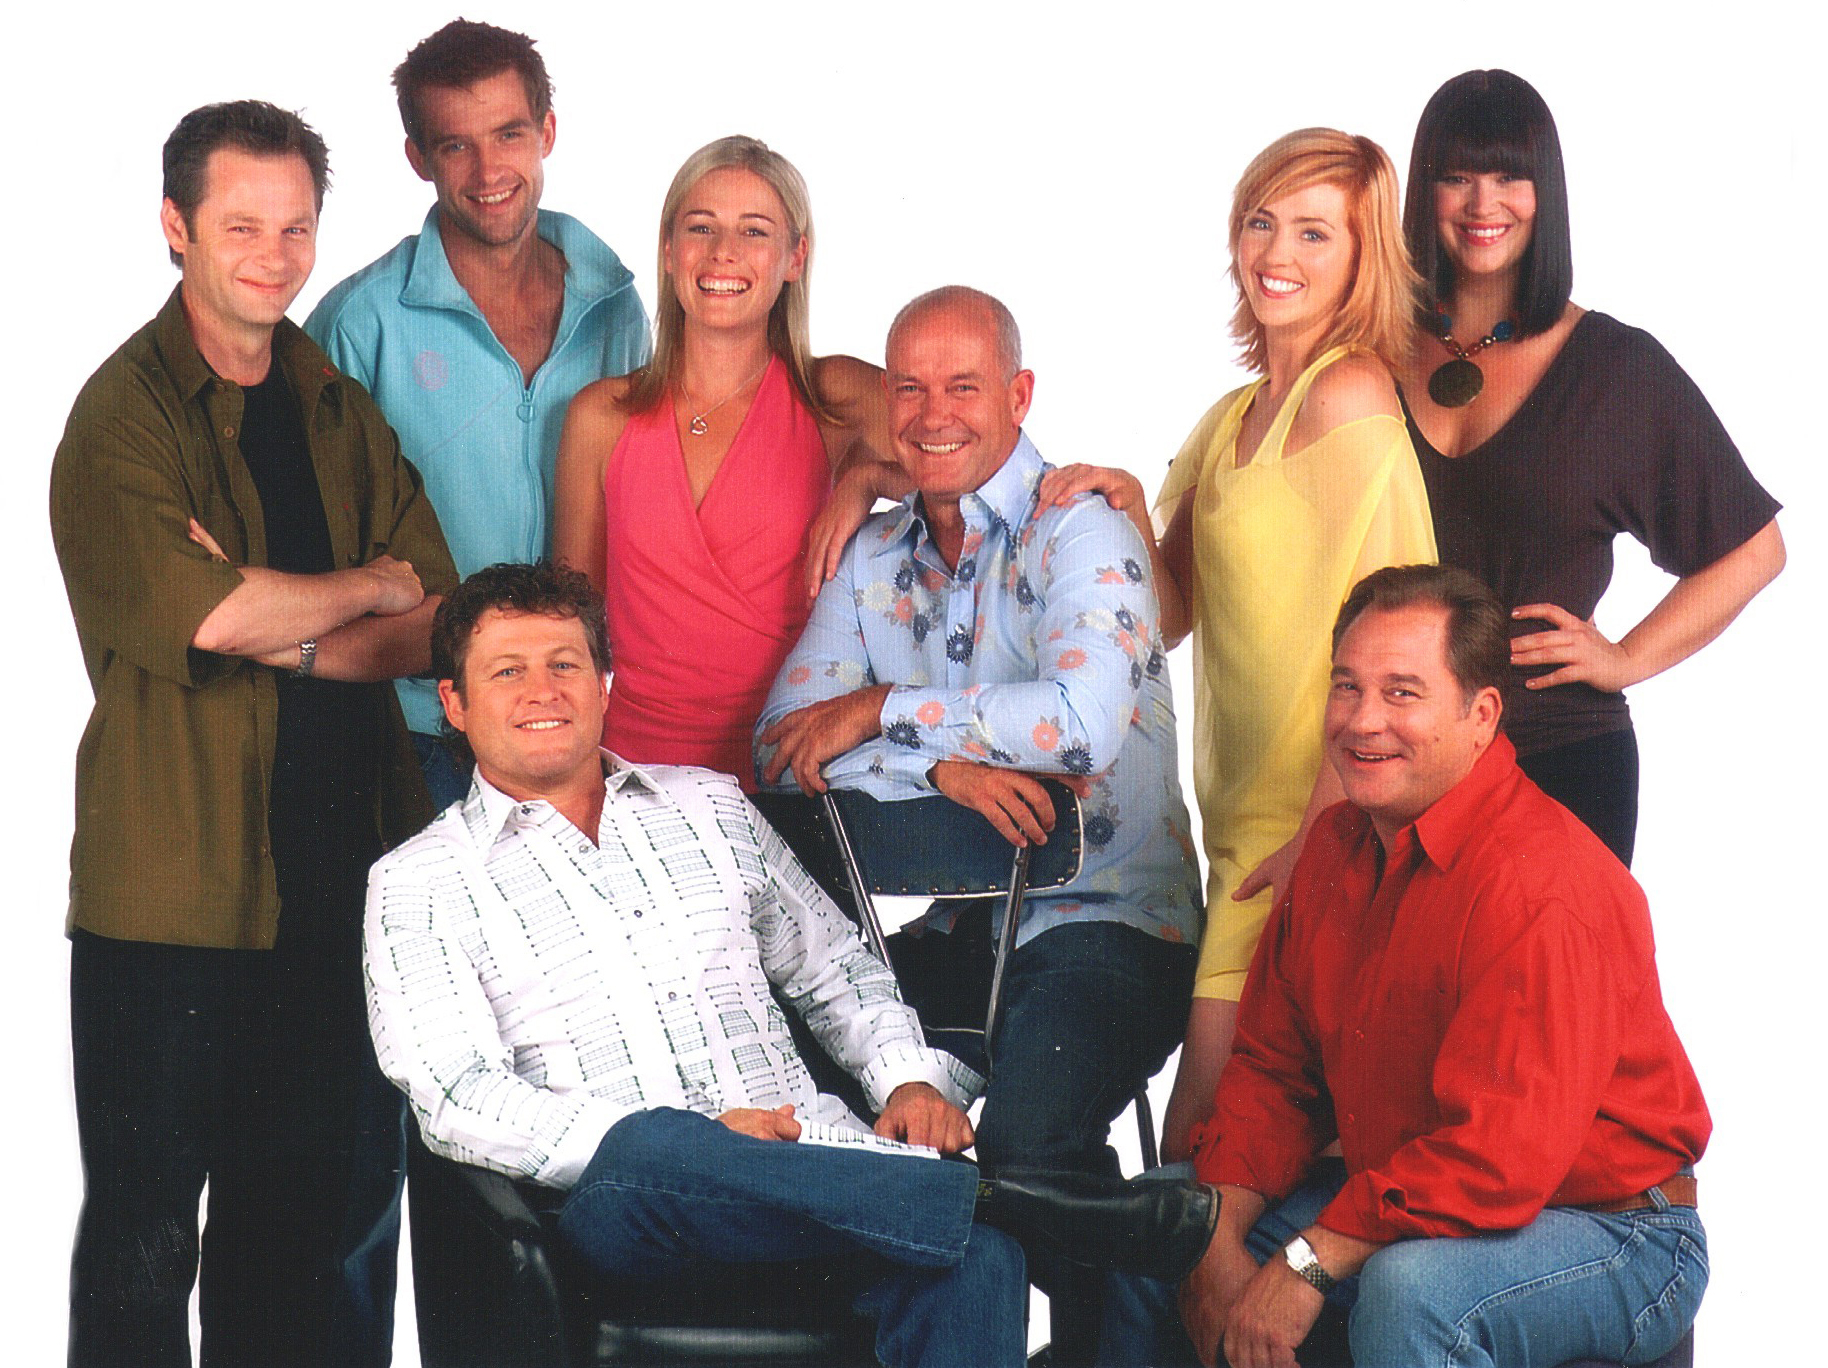 2004 Cast of STINGERS - Richard Morgan, Daniel Frederiksen, Kate Kendall, Jacinta Stapleton, Katrina Milosevic, and (seated) Peter Phelps, Gary Sweet, Jeremy Kewley.